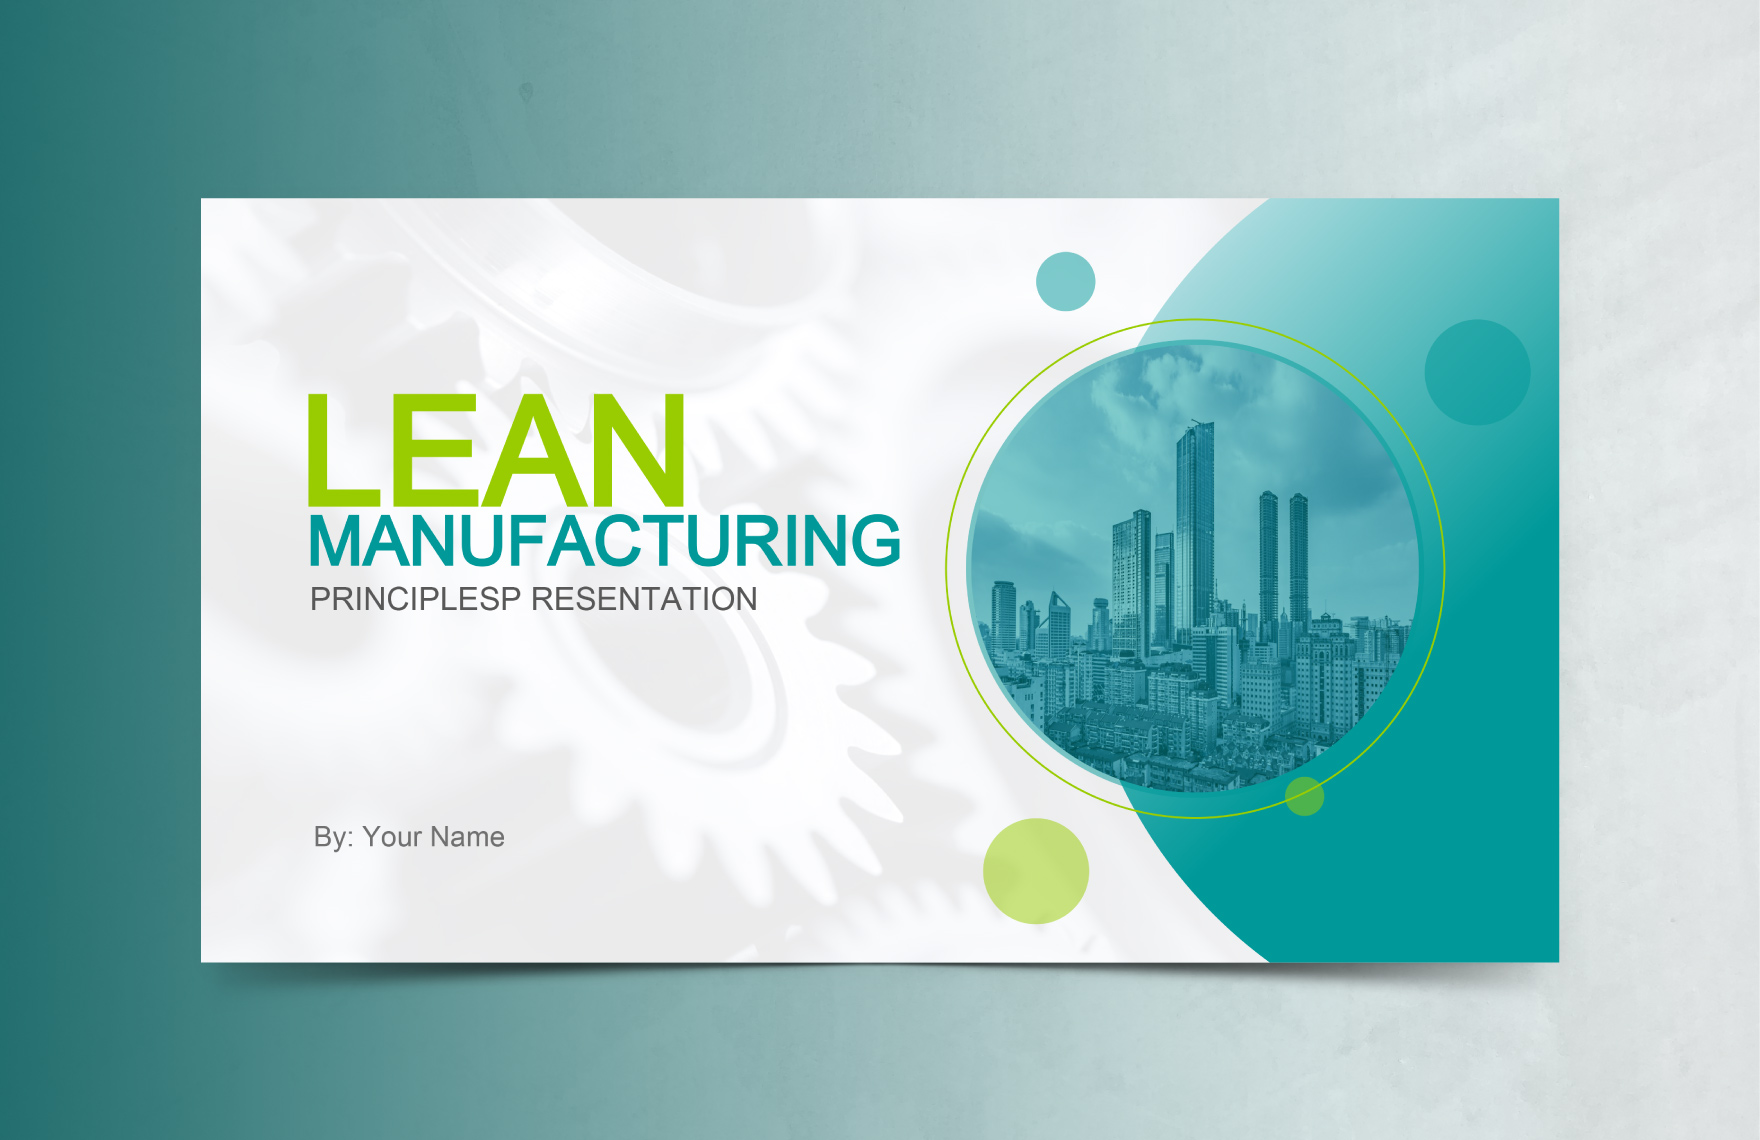 Lean Manufacturing Principles Presentation Template